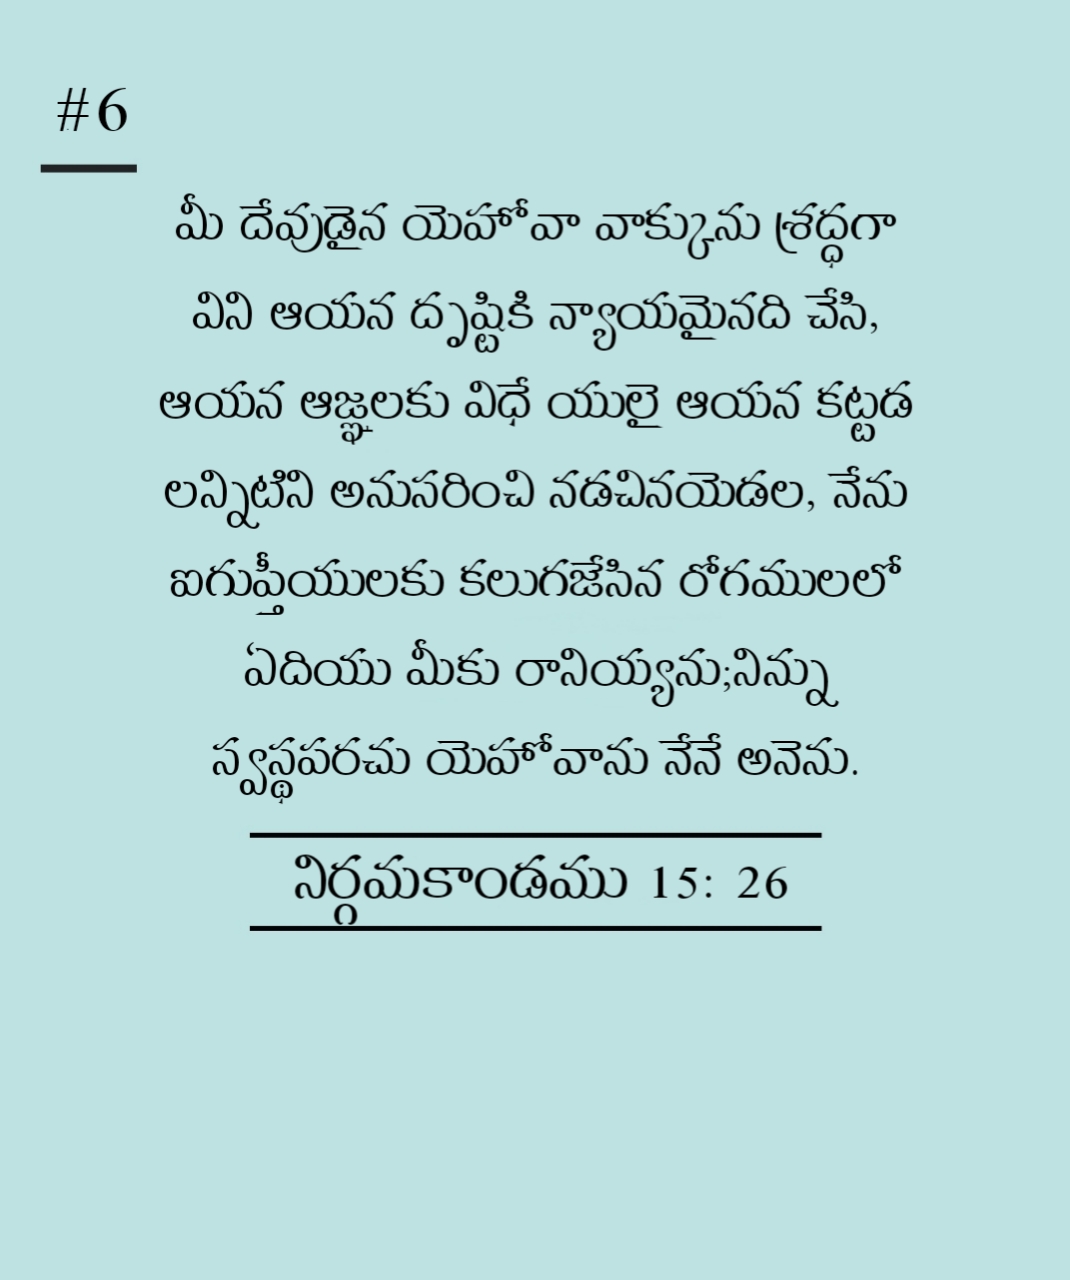 Daily Bible Quotes #6 - Telugu bible quiz